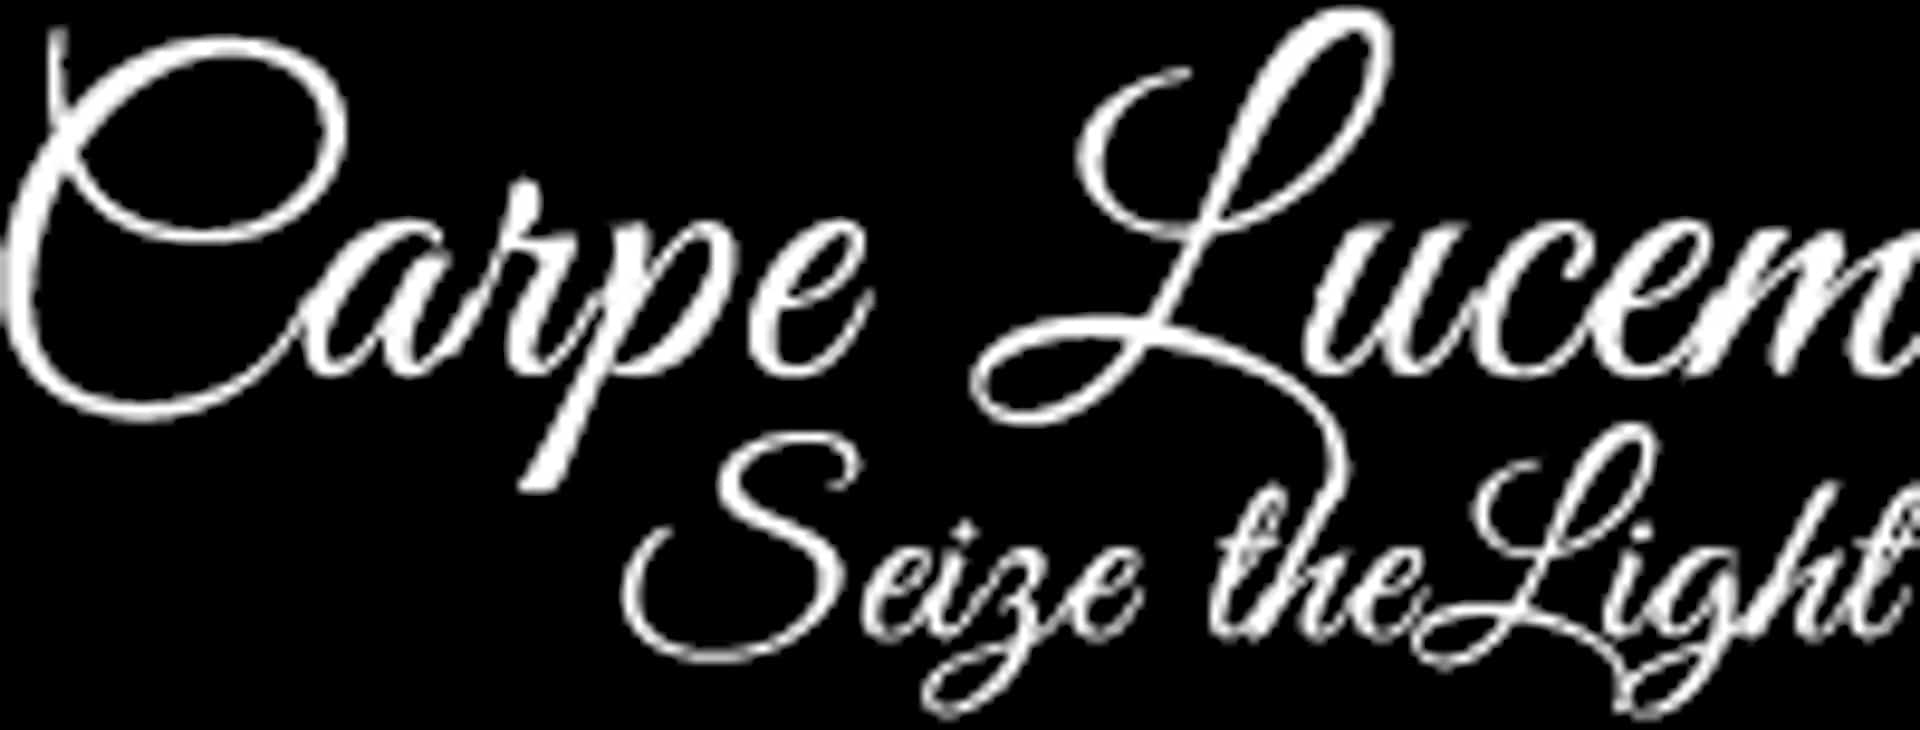 Carpe Lucem - Seize the light